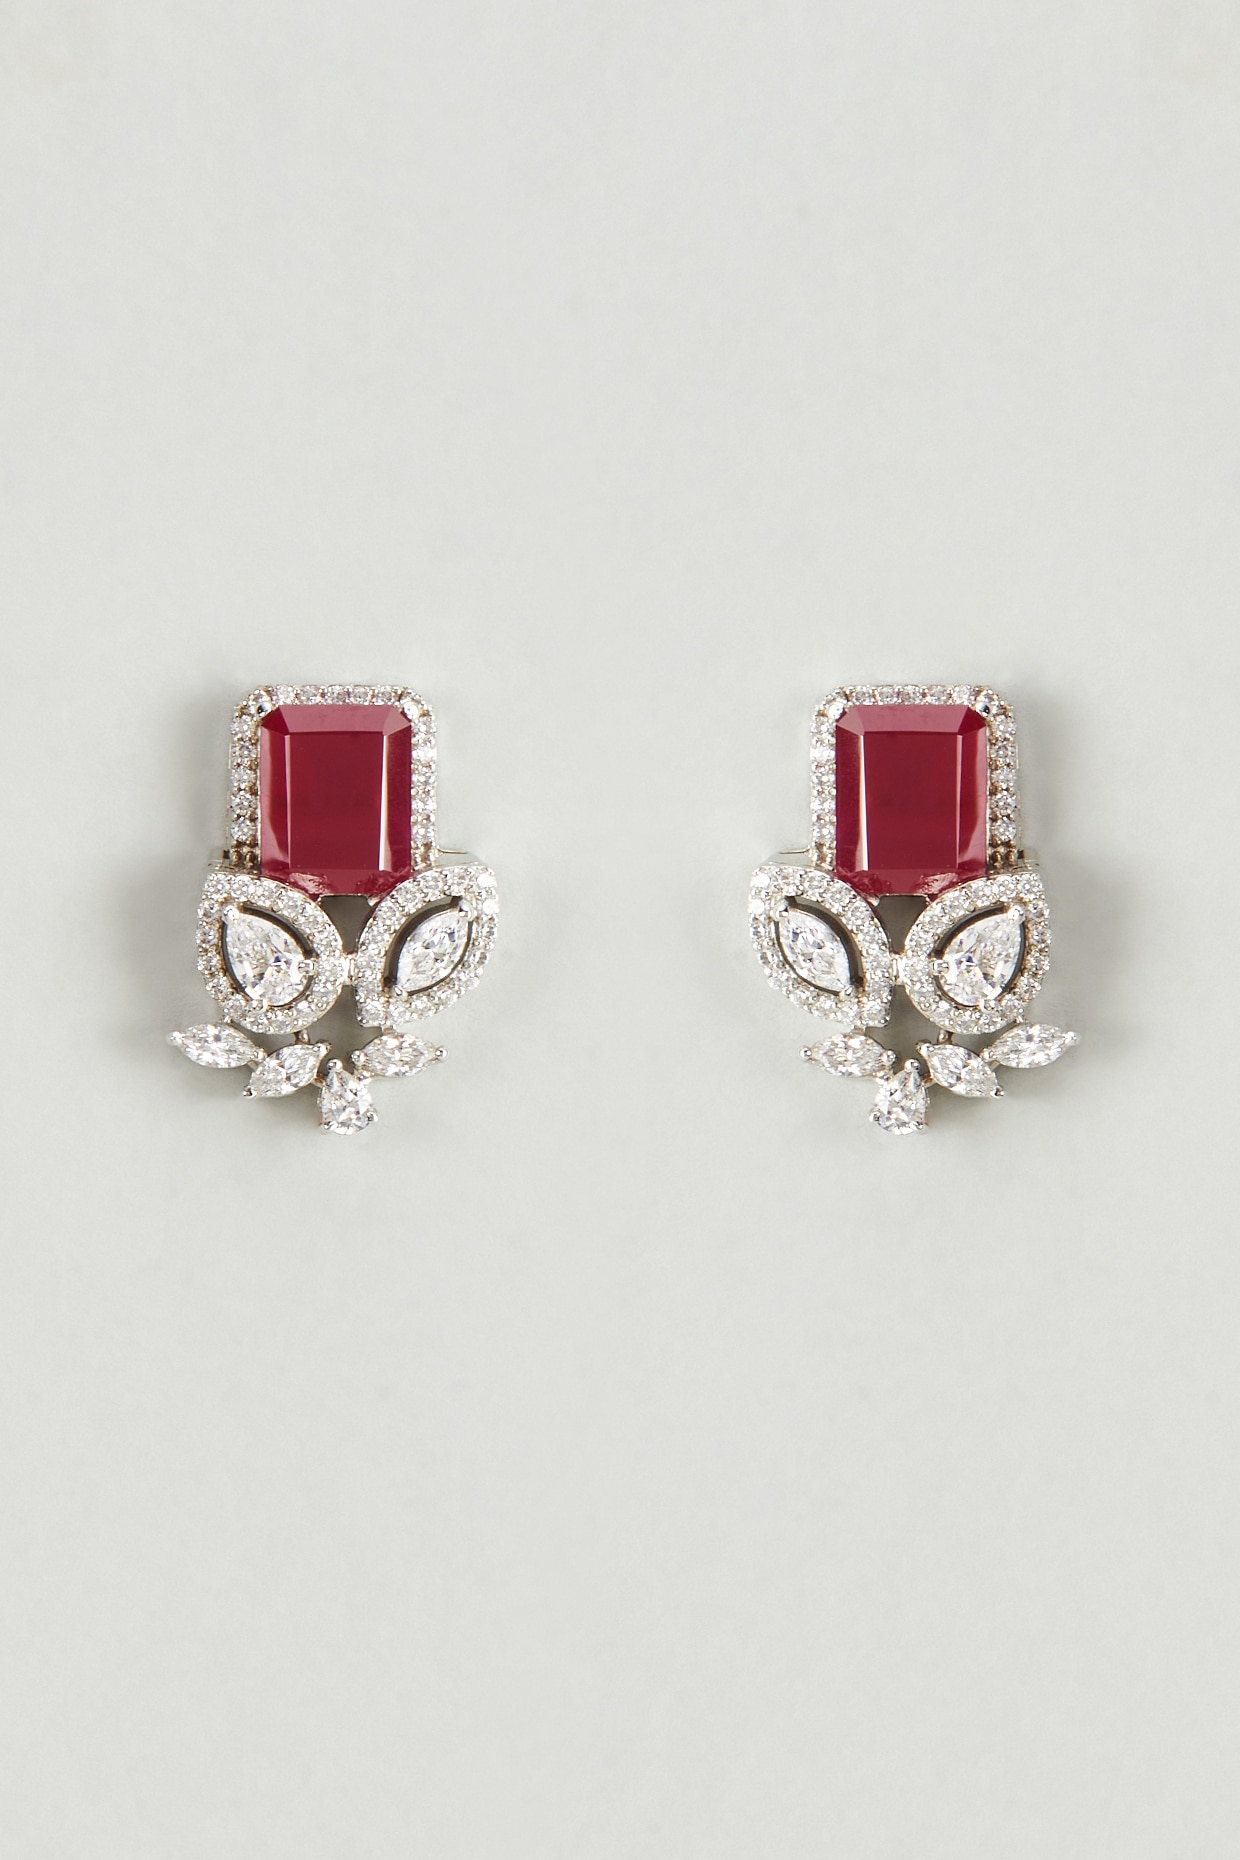 5446022 Swarovski Angelic Pierced Earrings, Red, Rhodium plating